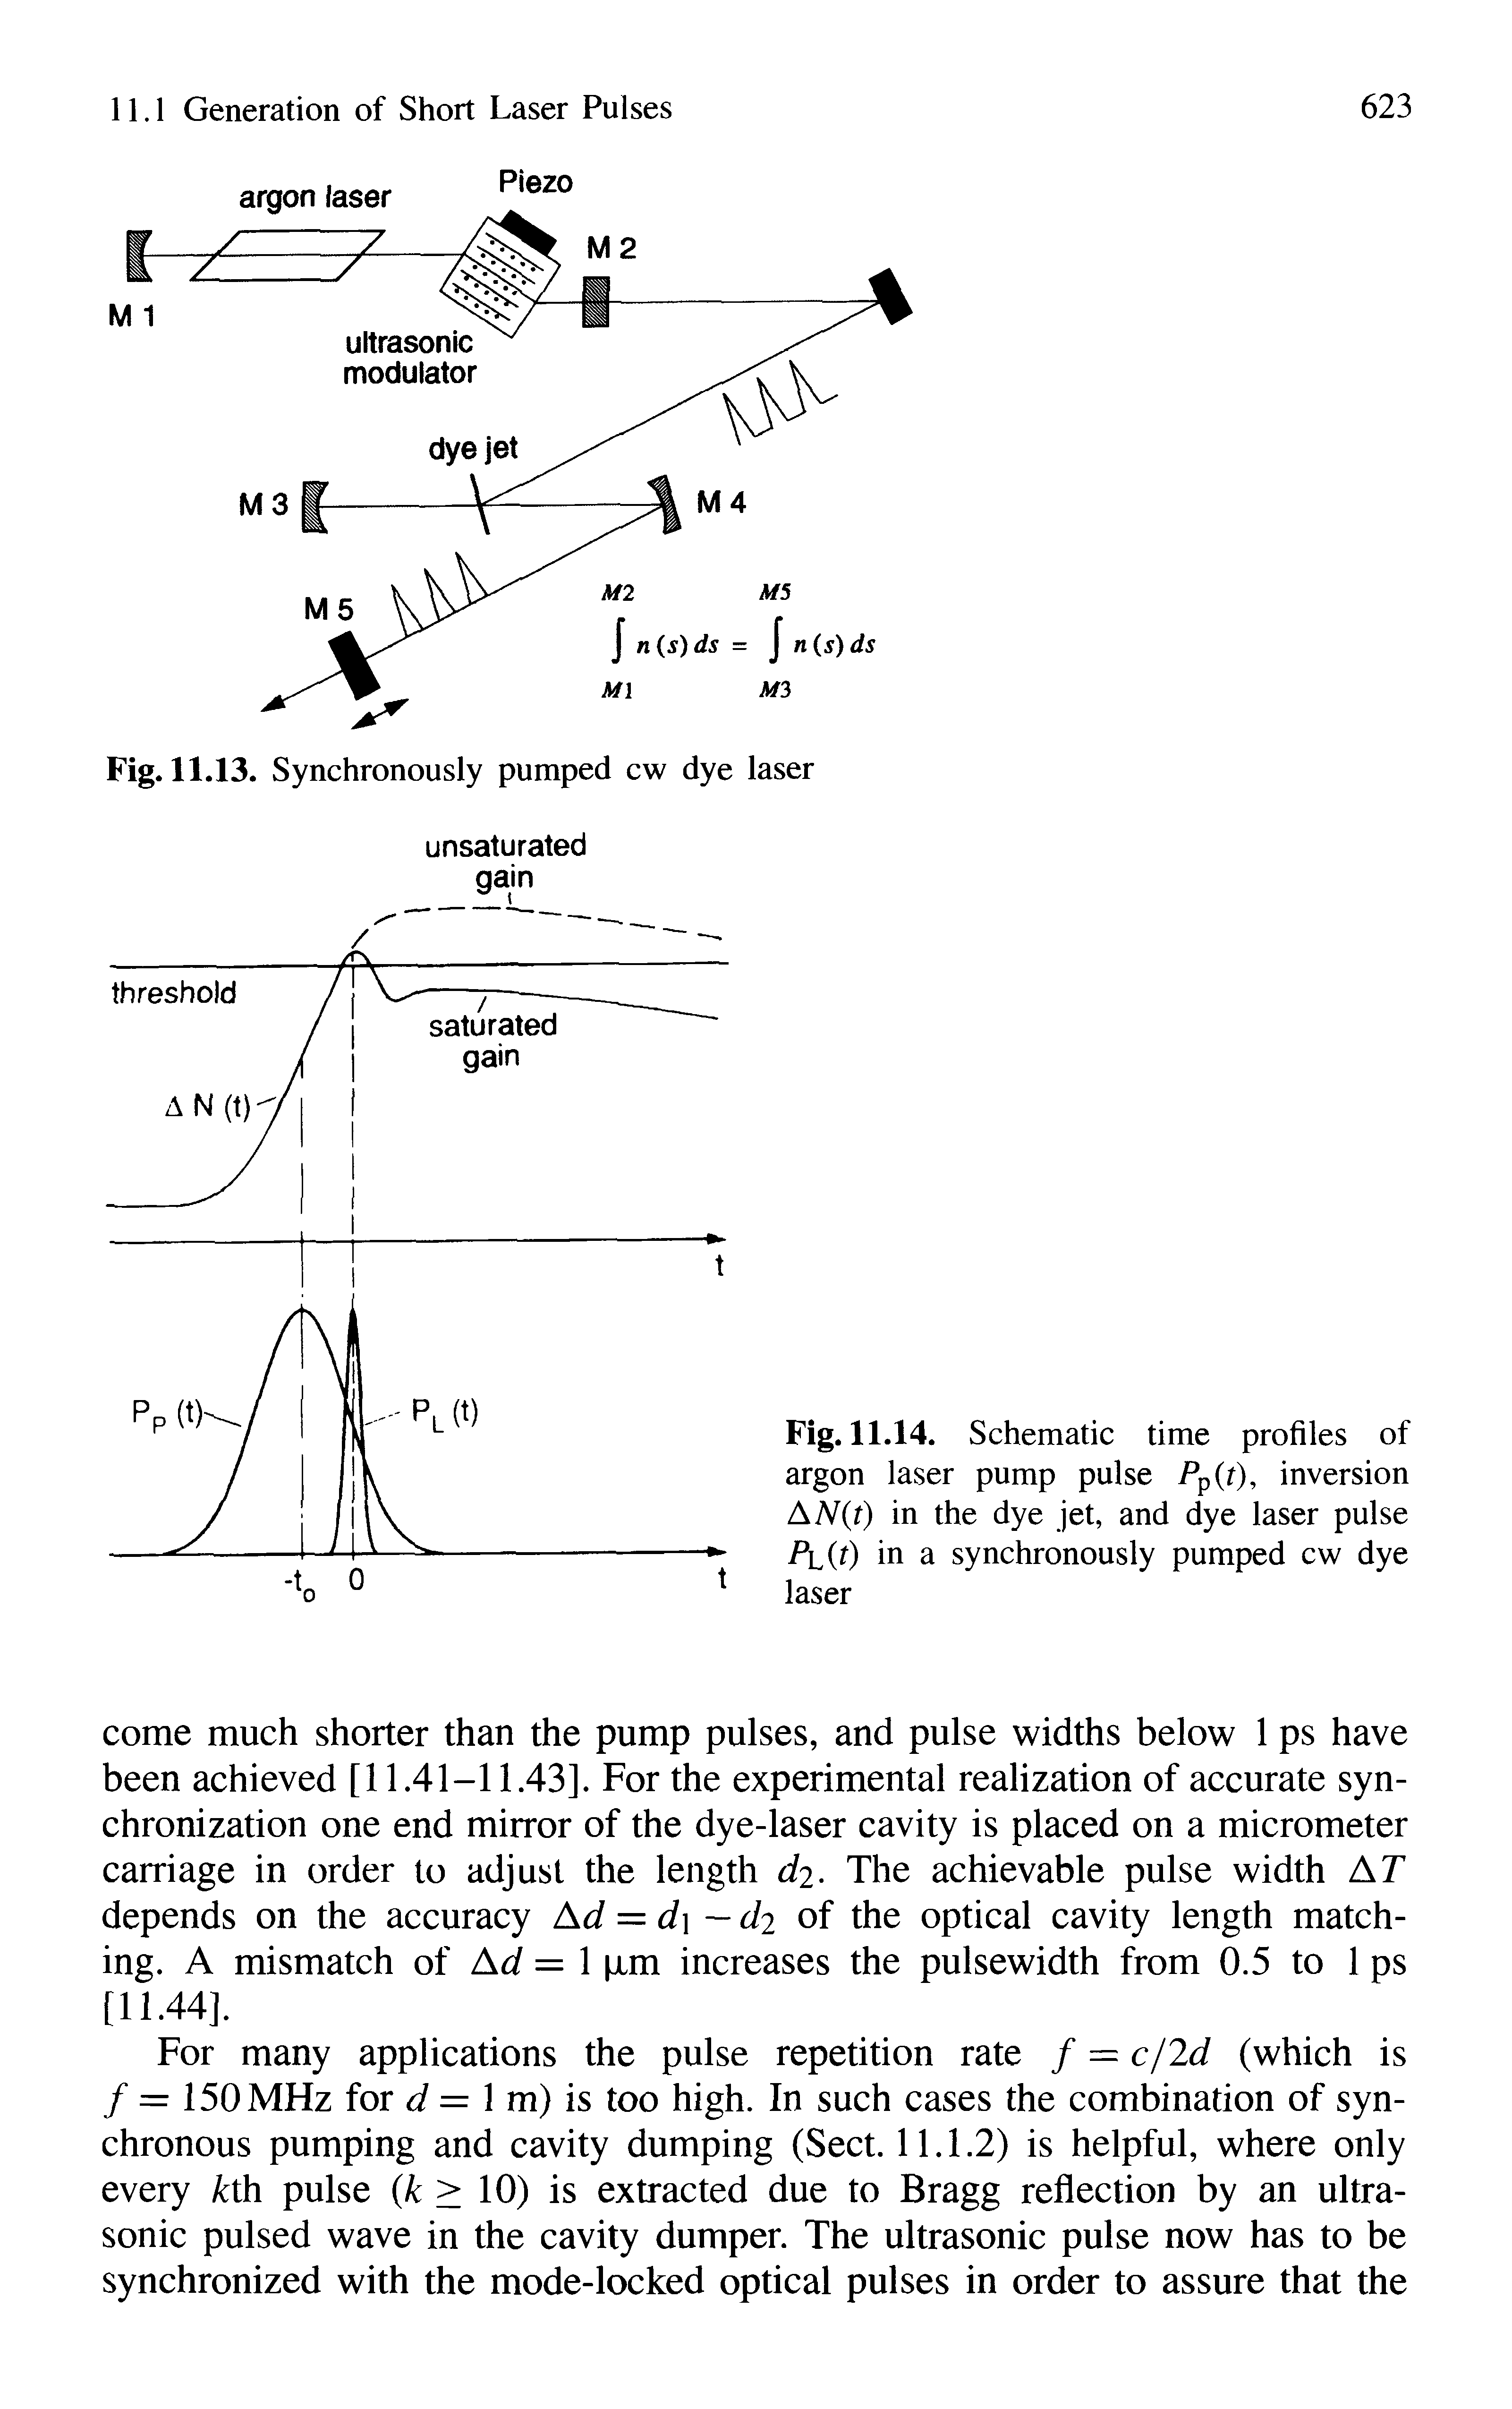 Fig. 11.14. Schematic time profiles of argon laser pump pulse inversion...